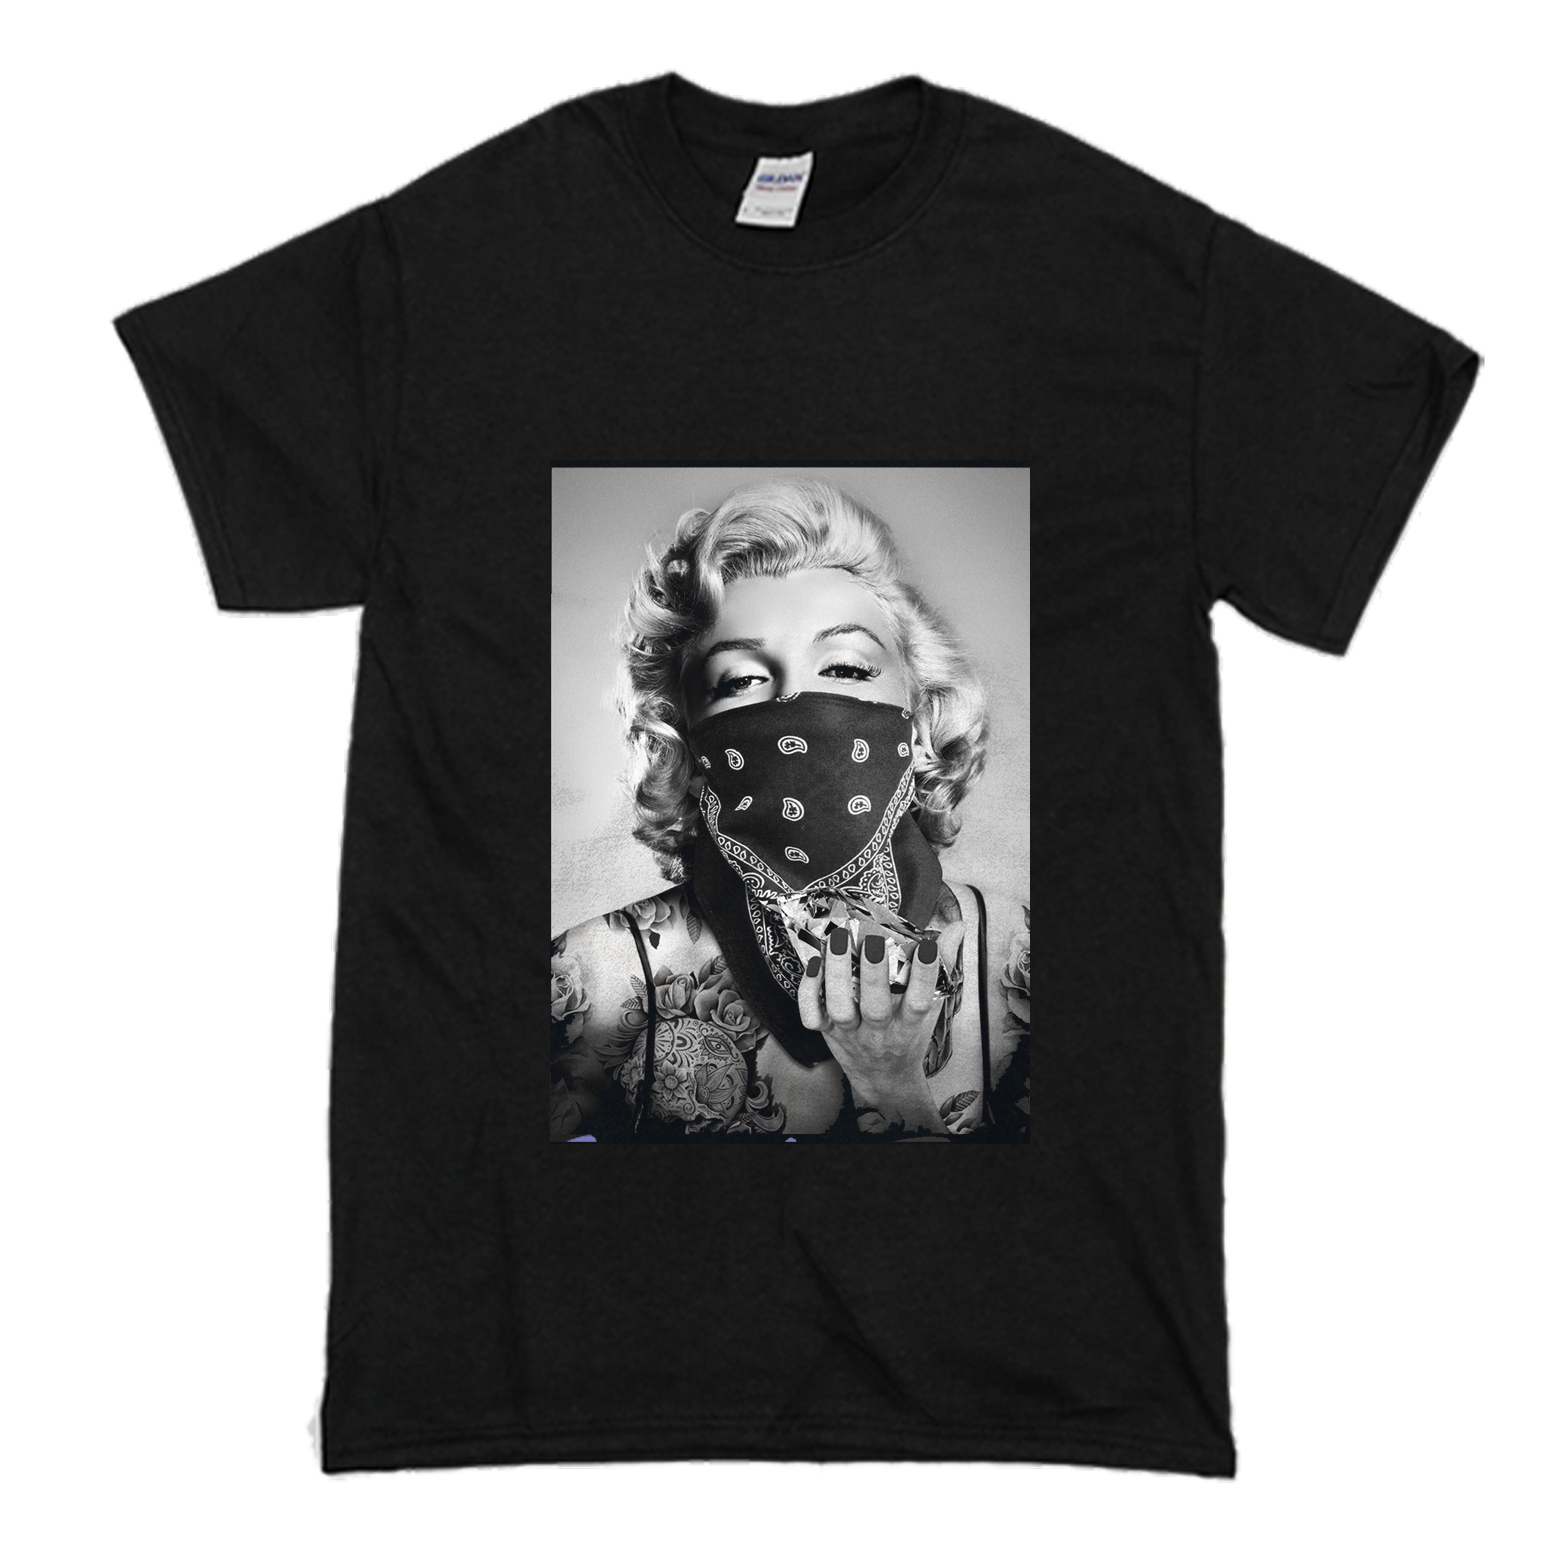 Marilyn Monroe Blue Bandana T Shirt (BSM)